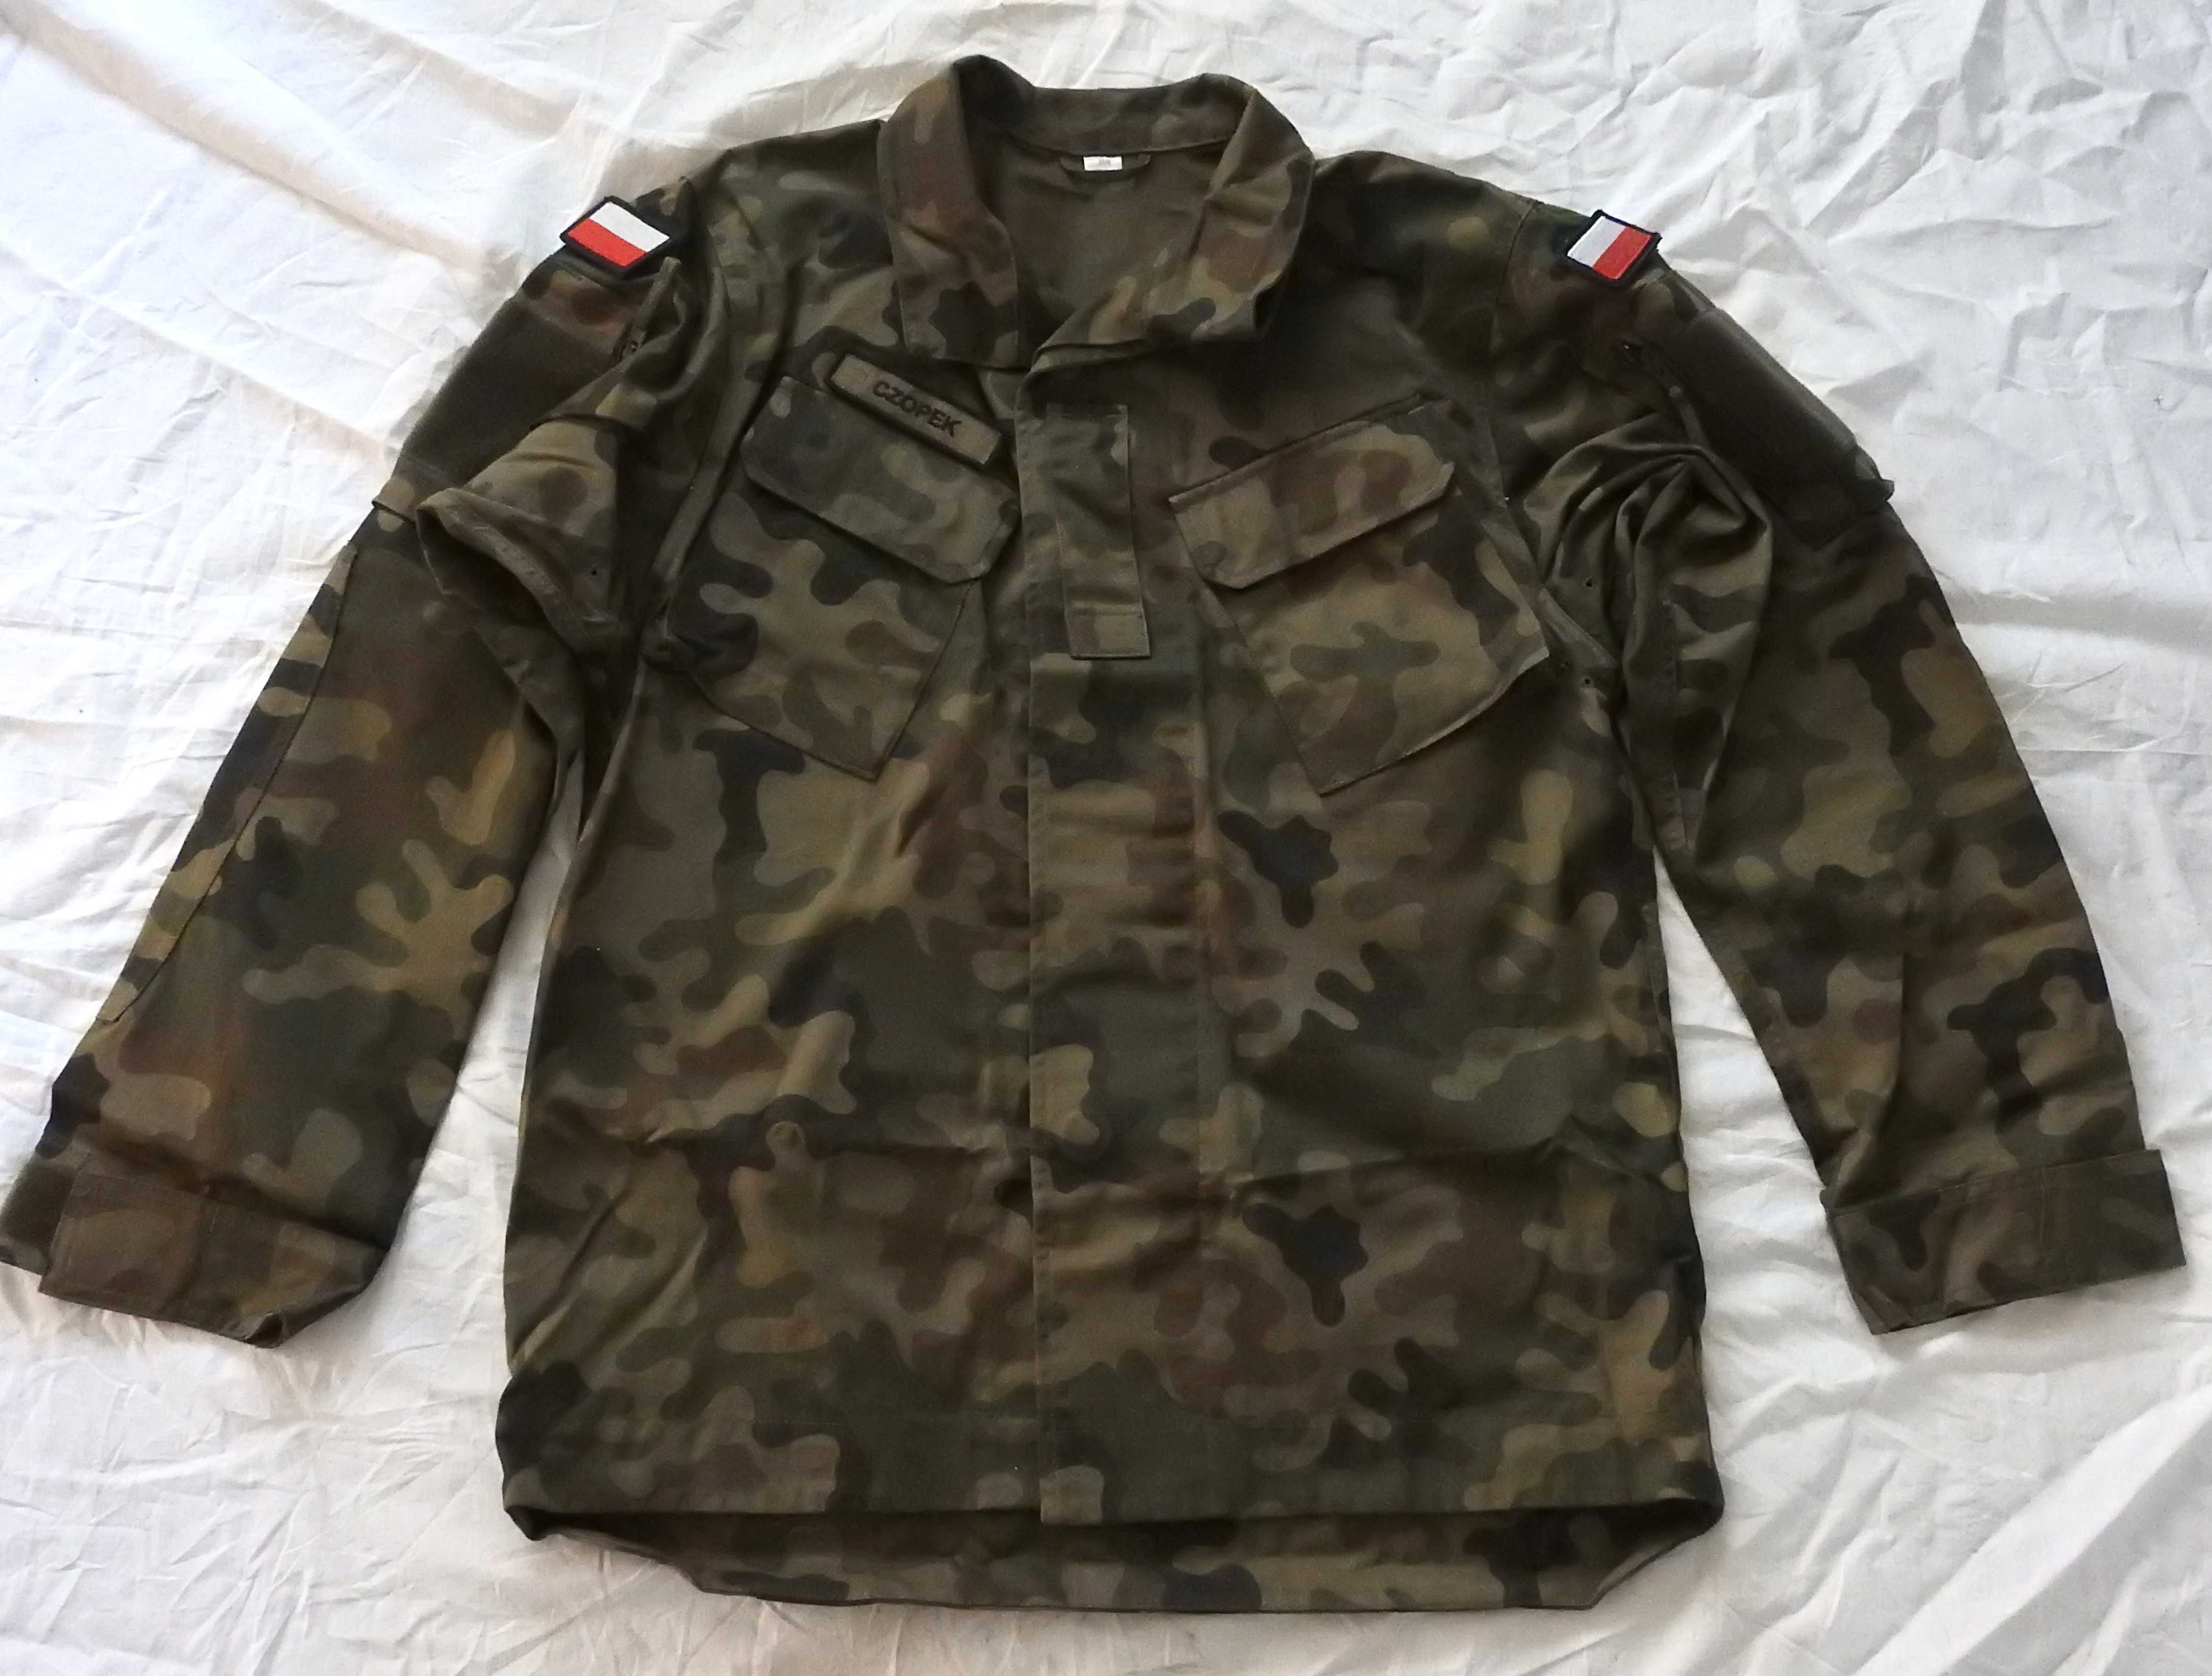 Oryginalna bluza kurtka mundur polowy WP MON